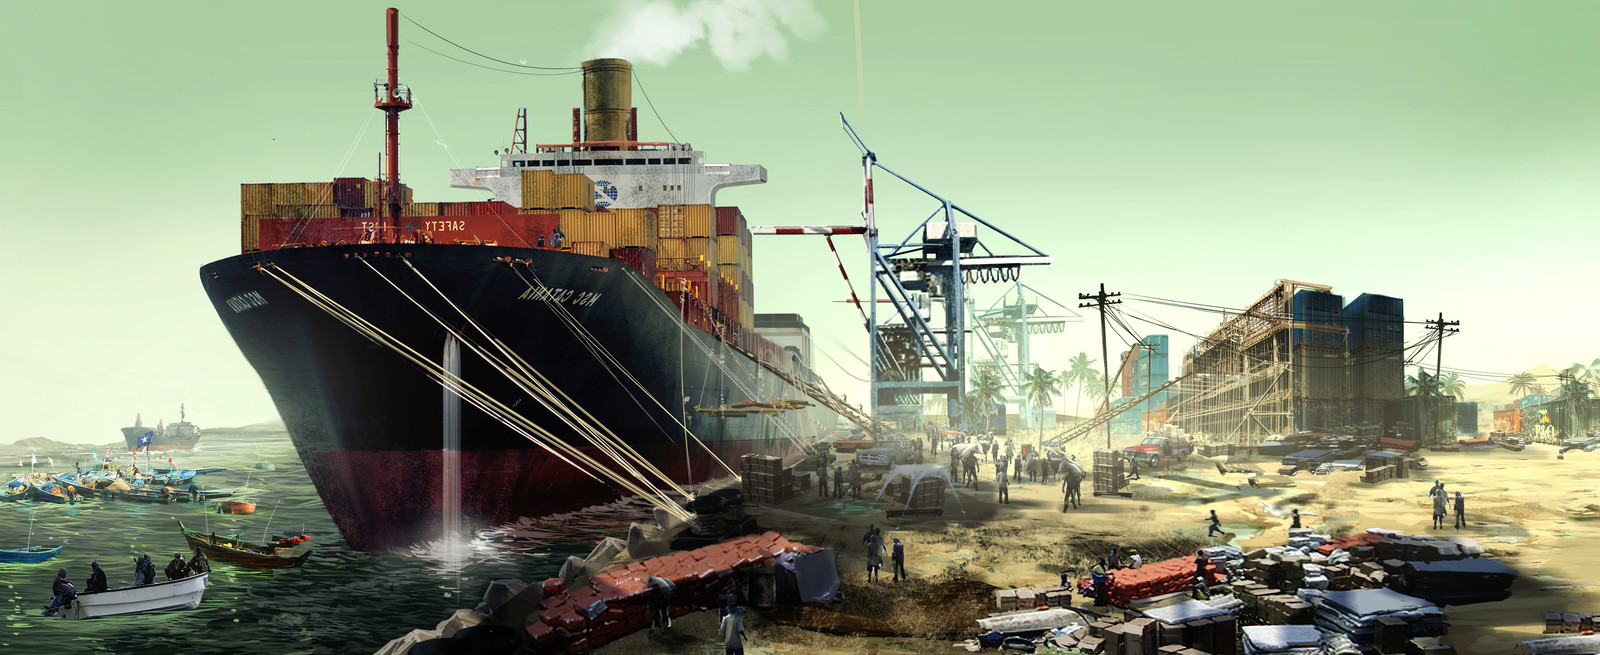 Somali shipyard